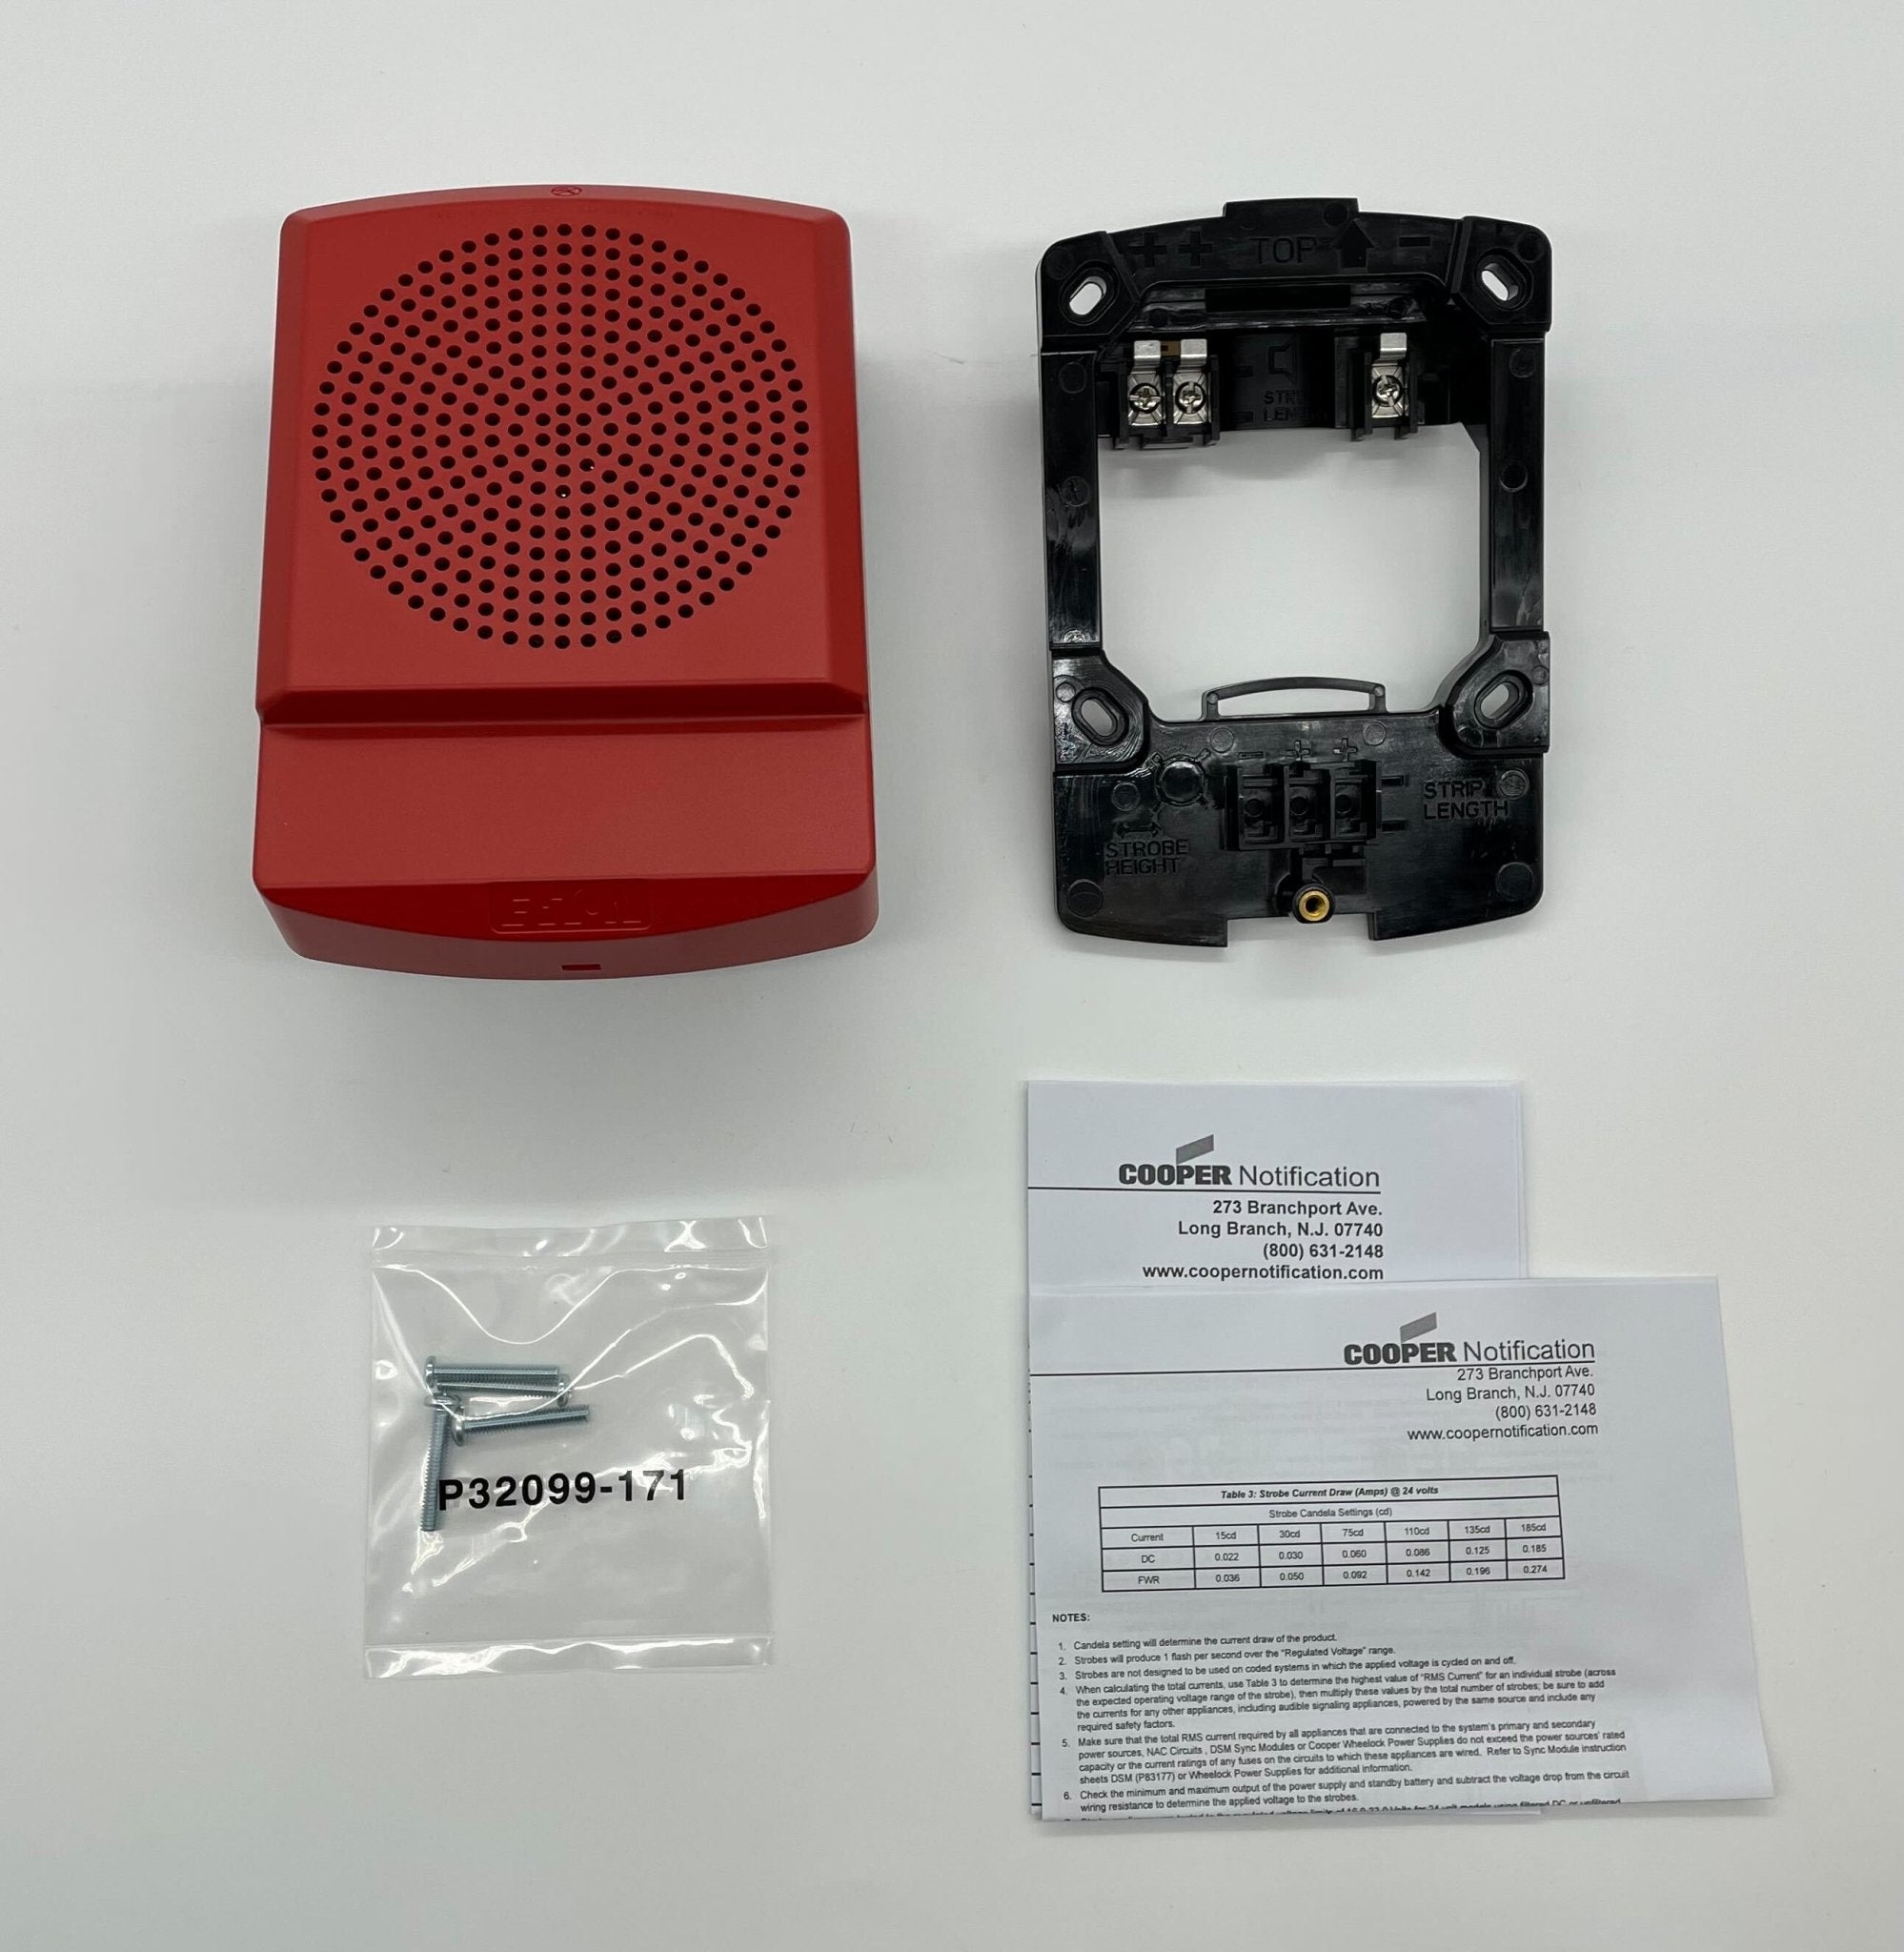 Wheelock ELSPKR - The Fire Alarm Supplier